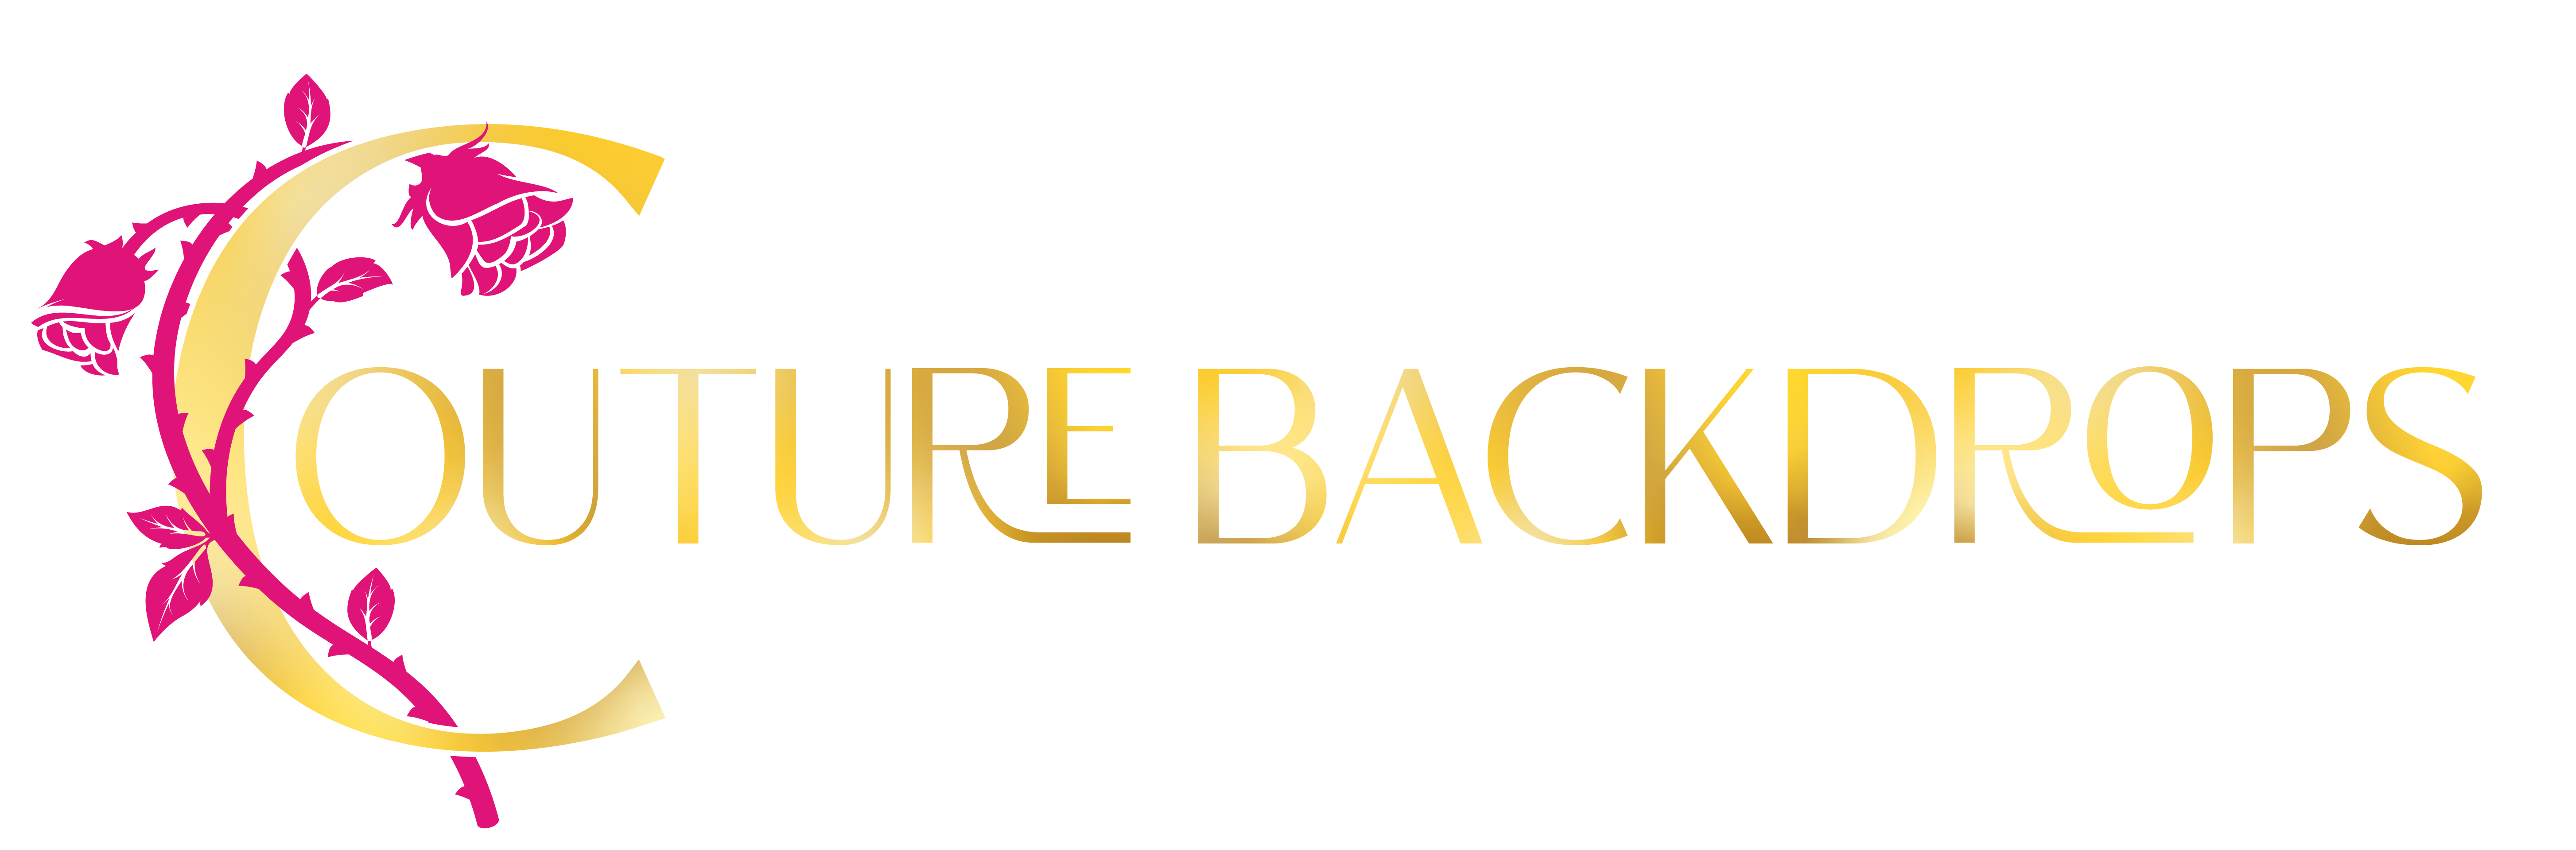 Couture Backdrops Logo